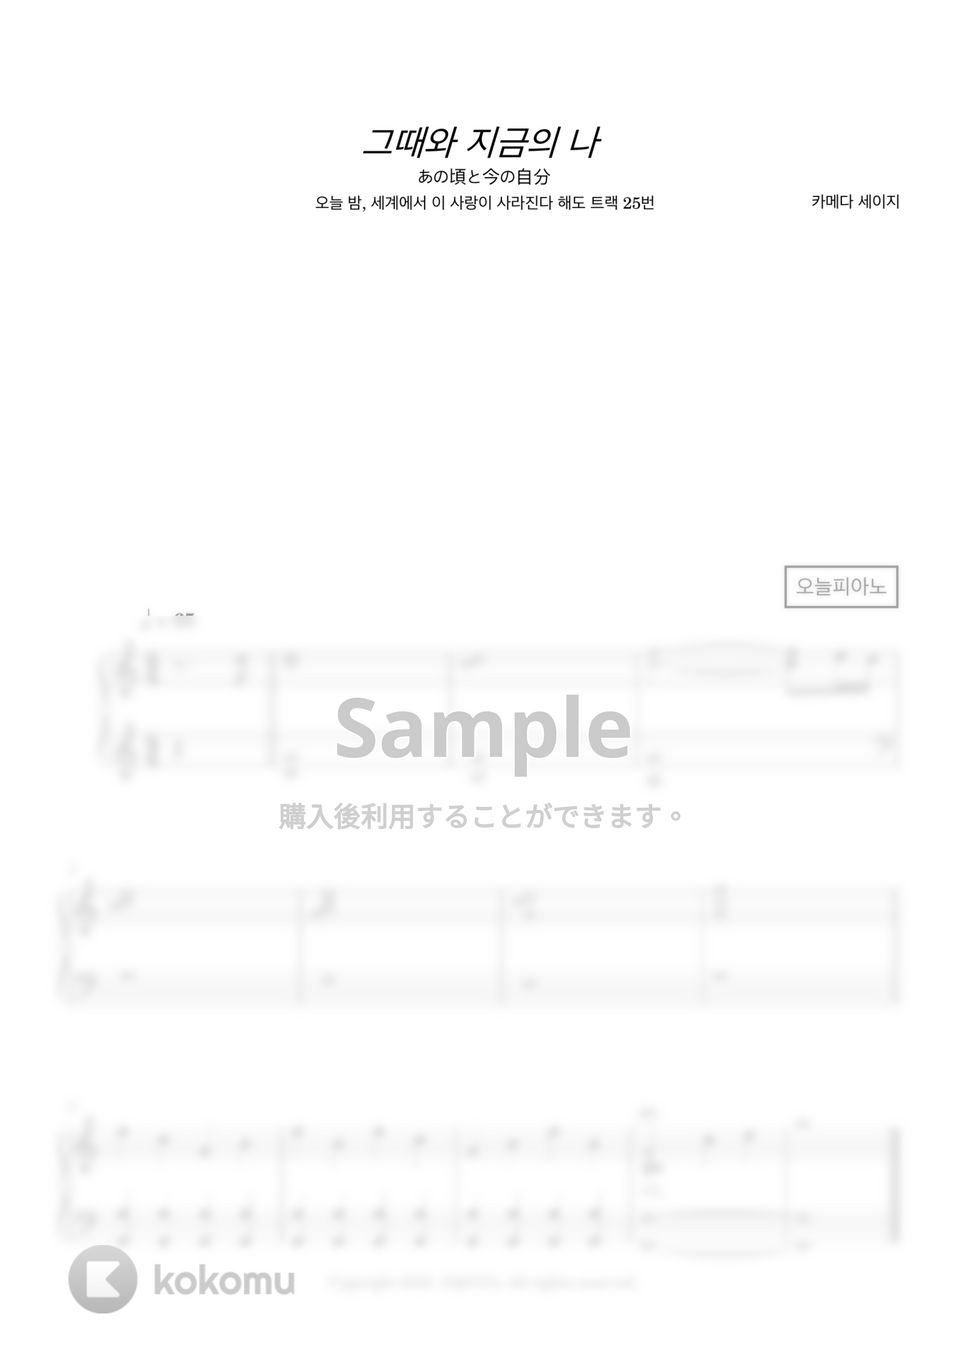 Seiji Kameda - あの頃と今の自分 (今夜、世界からこの恋が消えても track 25) by 今日ピアノ(Oneul Piano)